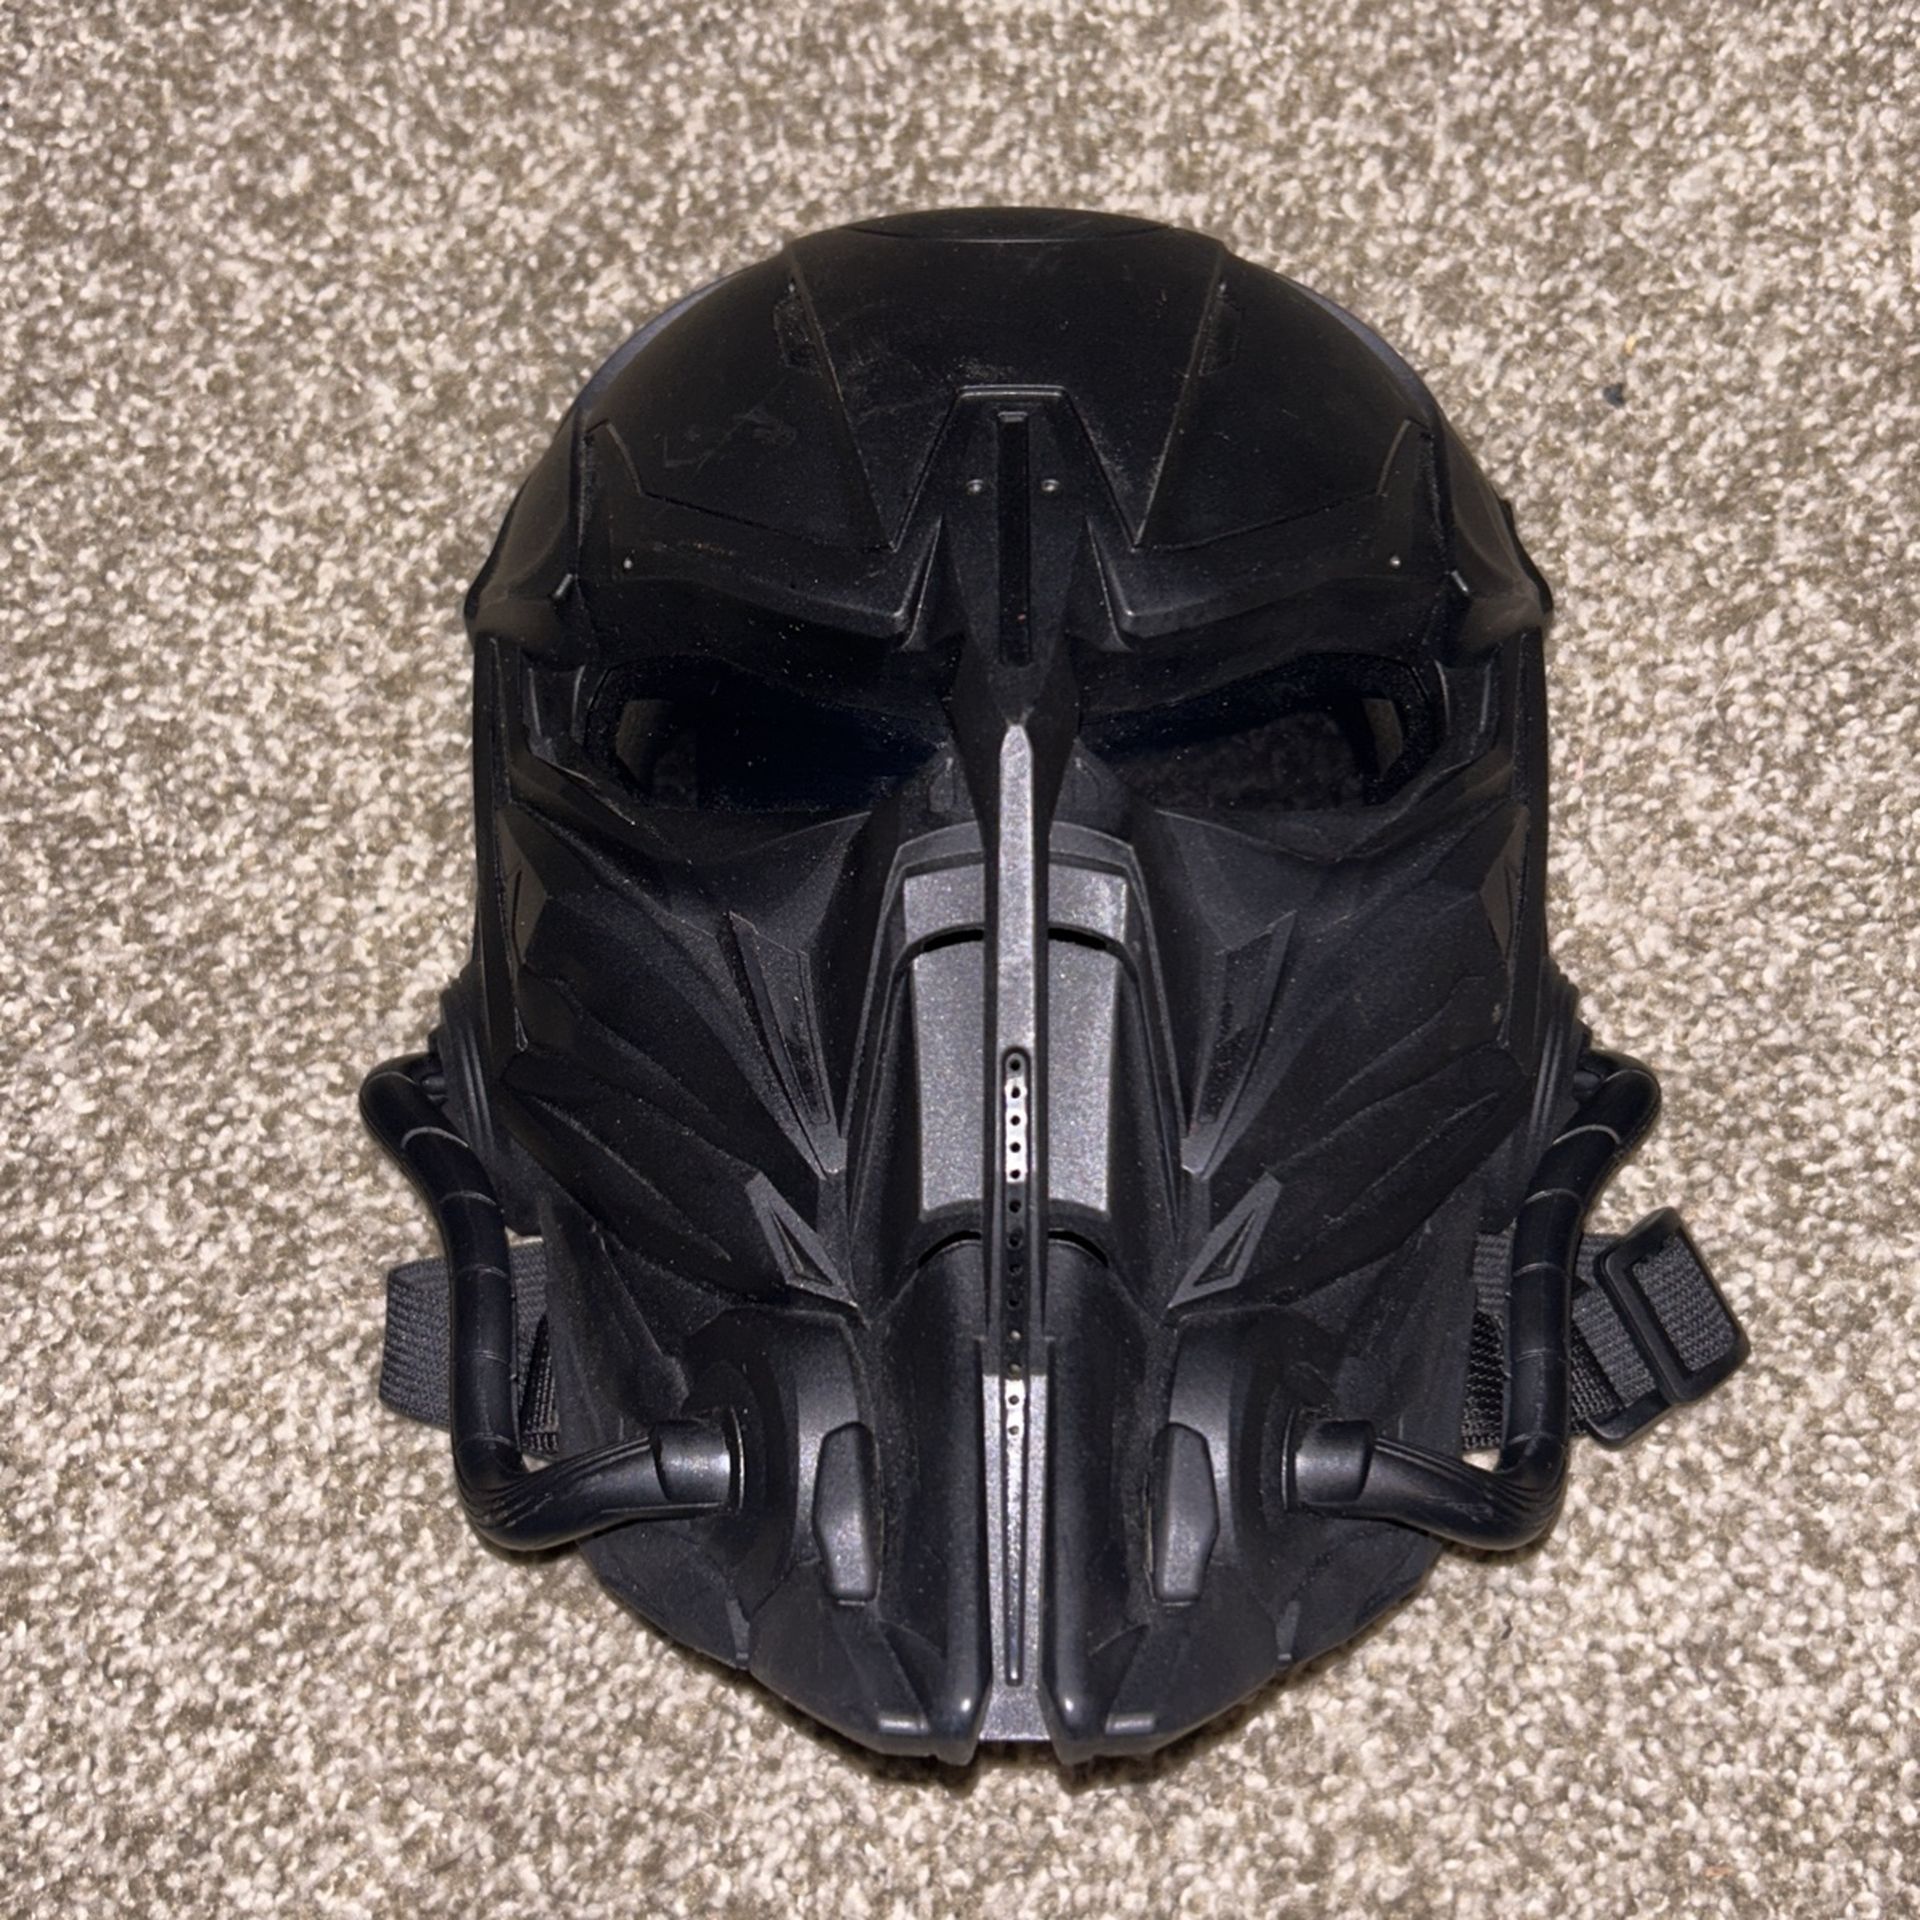 Airsoft Mask 